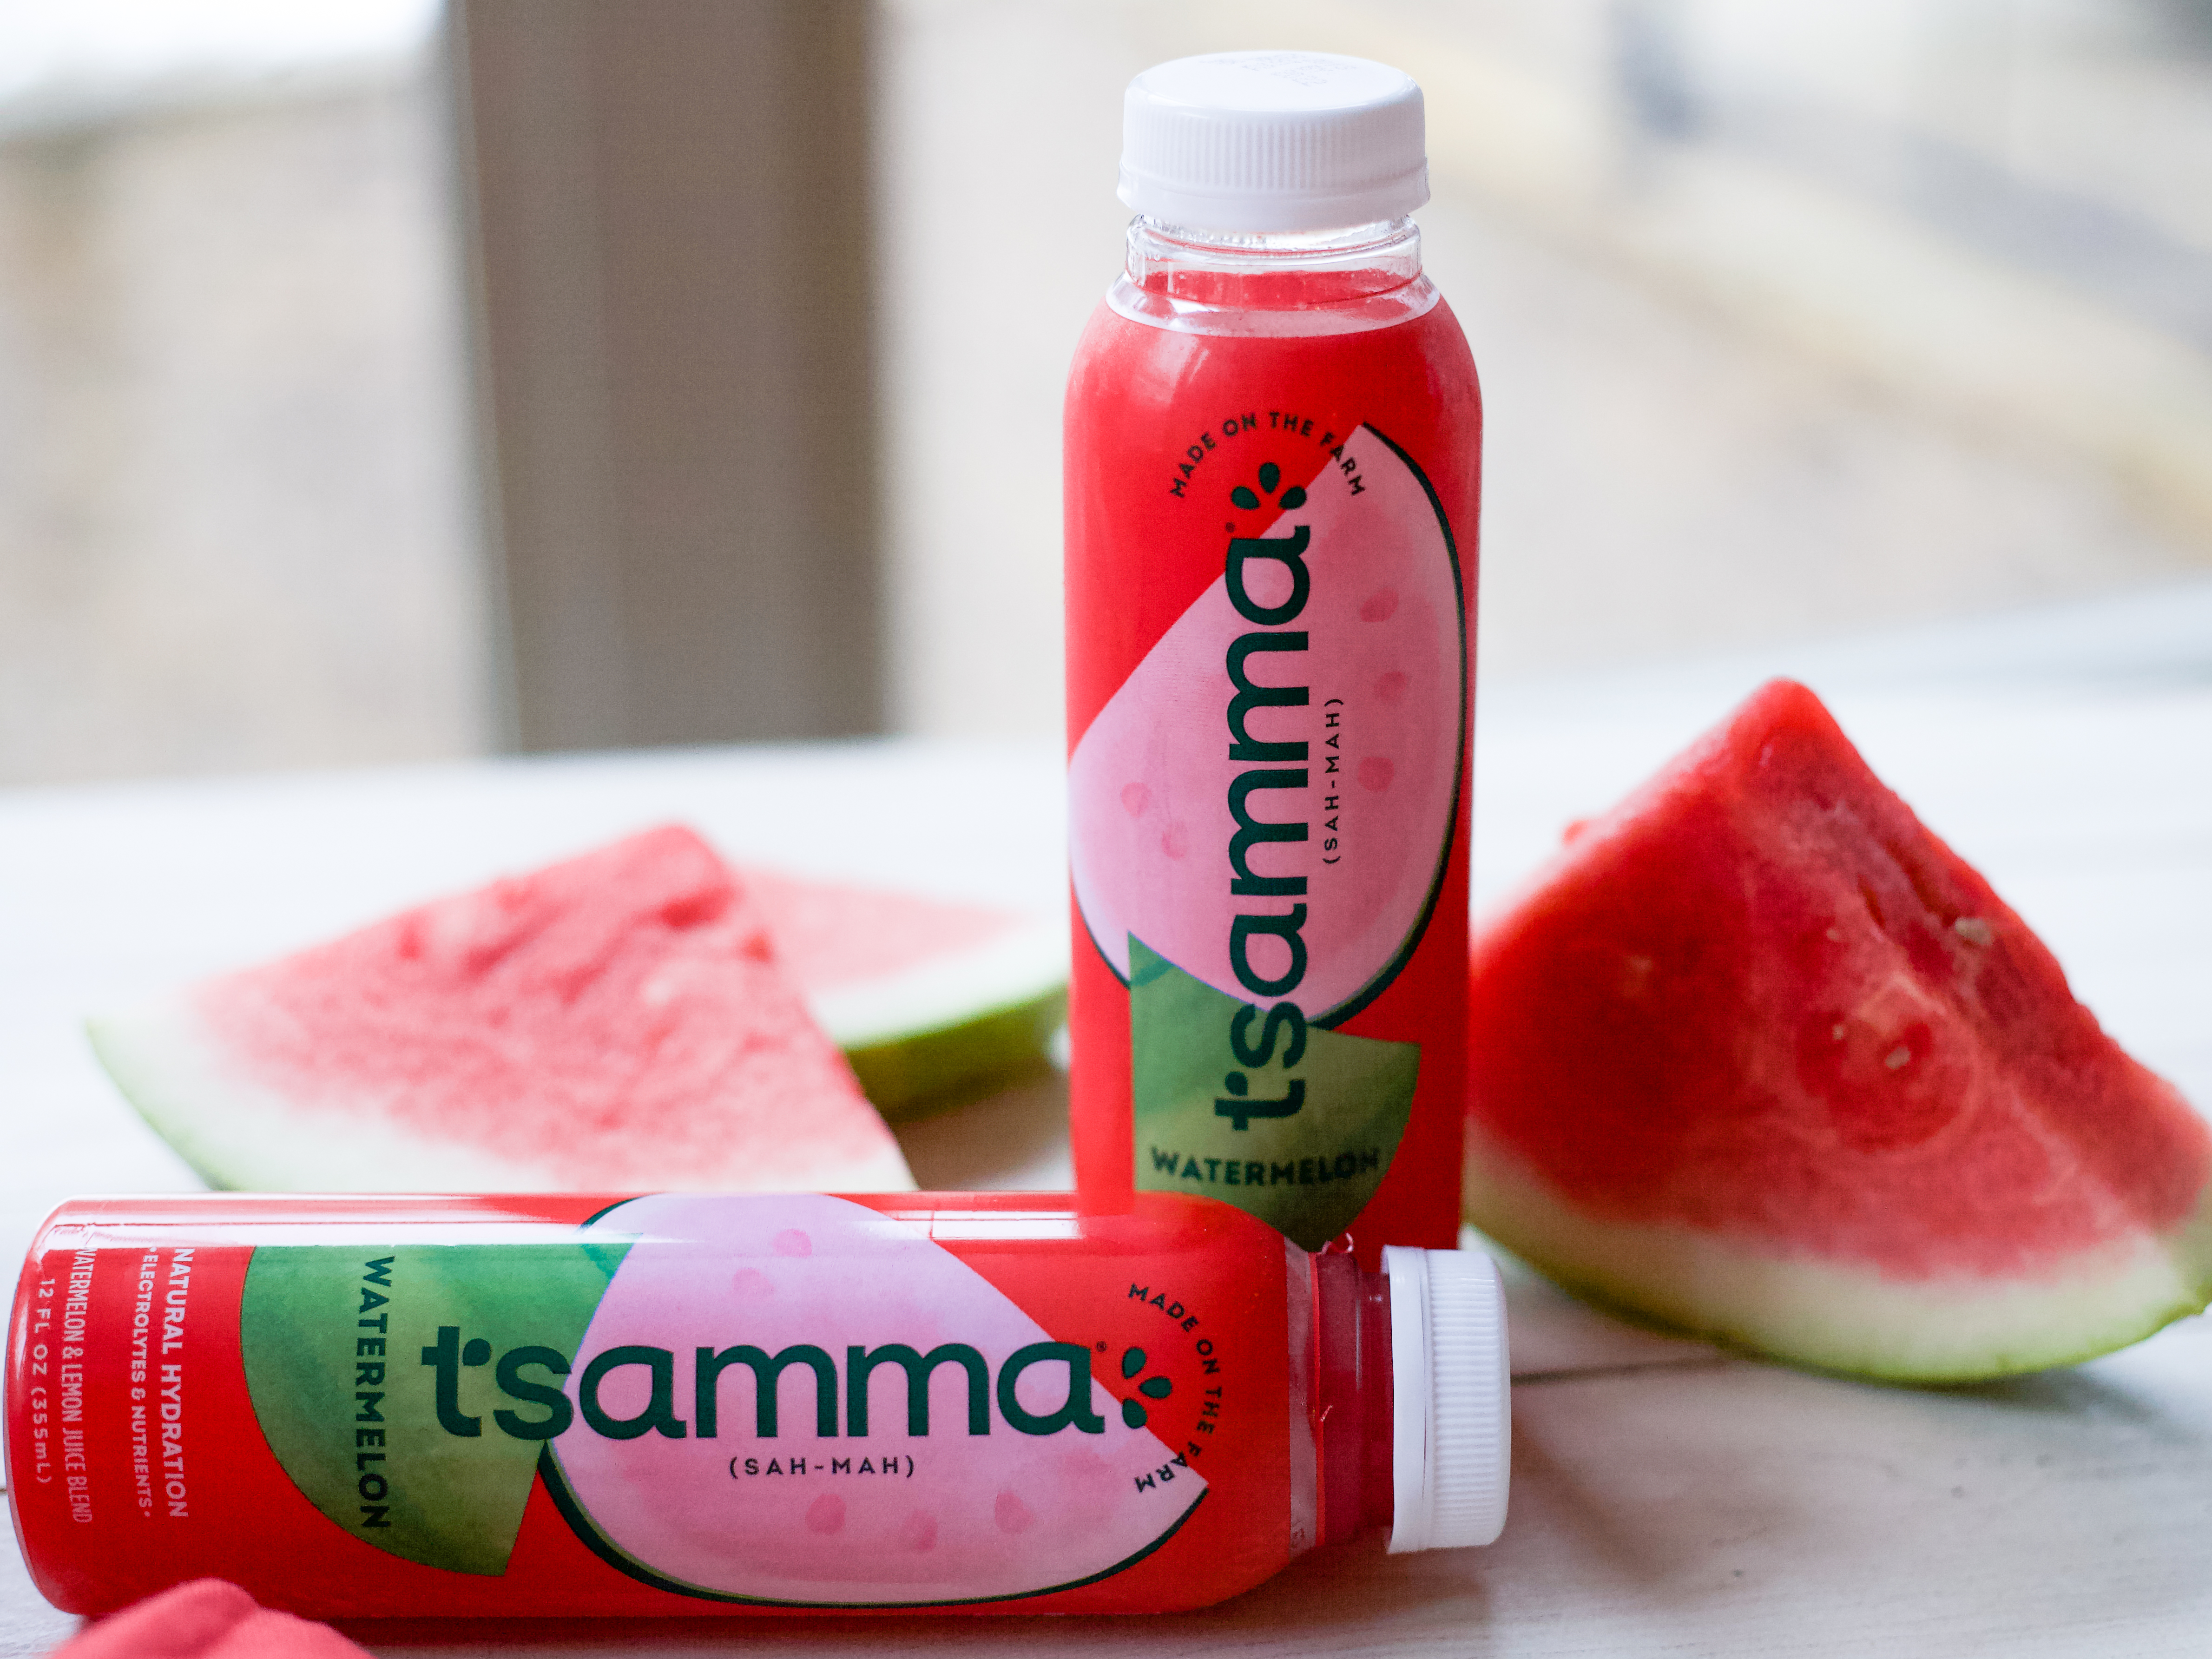 Tsamma Watermelon Juice Just $1.50 At Publix